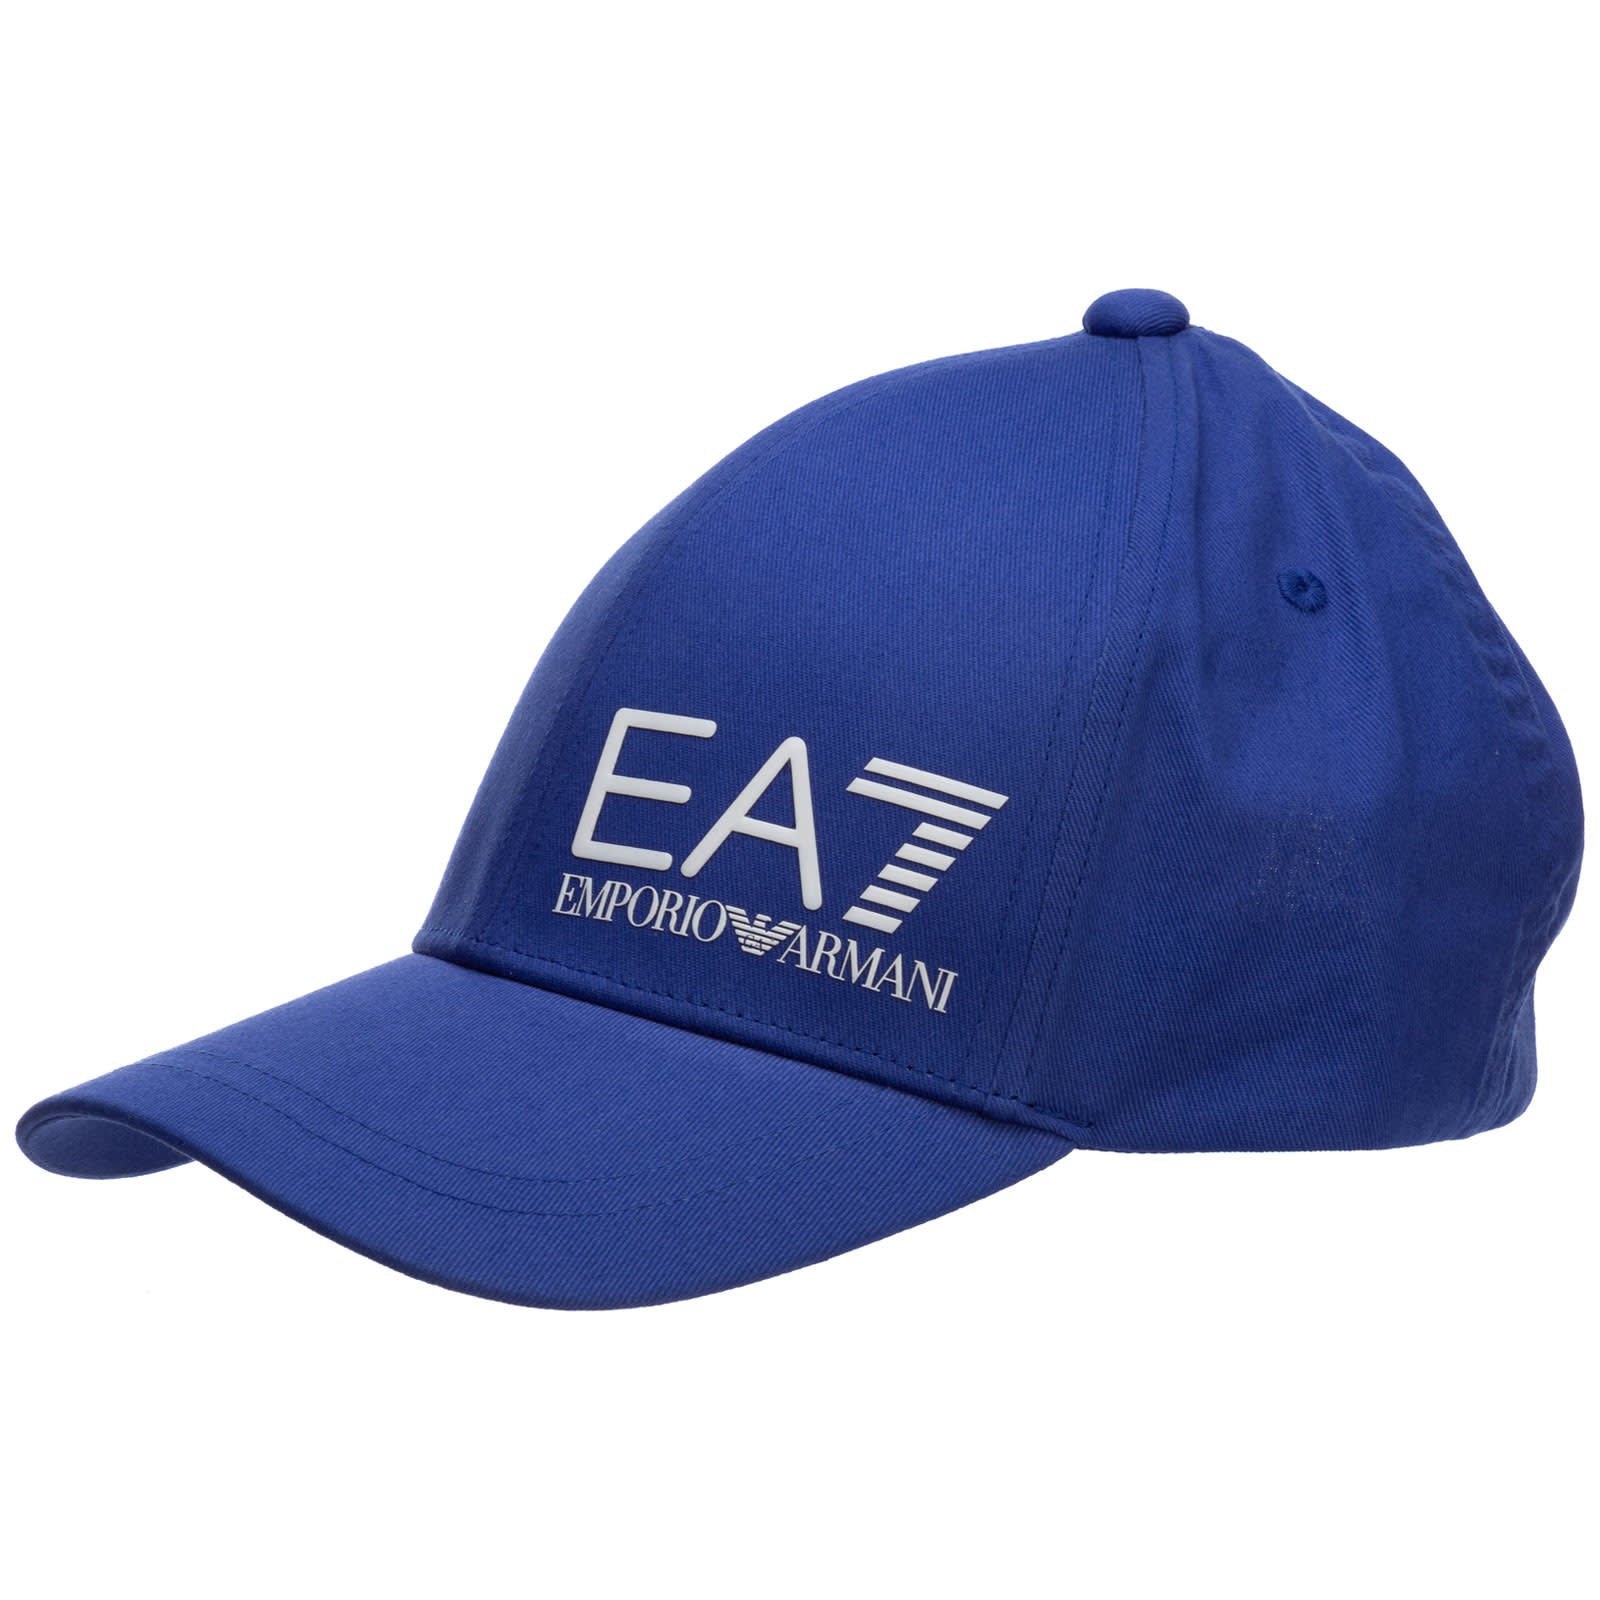 EA7 Emporio Armani Patchouli Nosy Be Baseball Cap